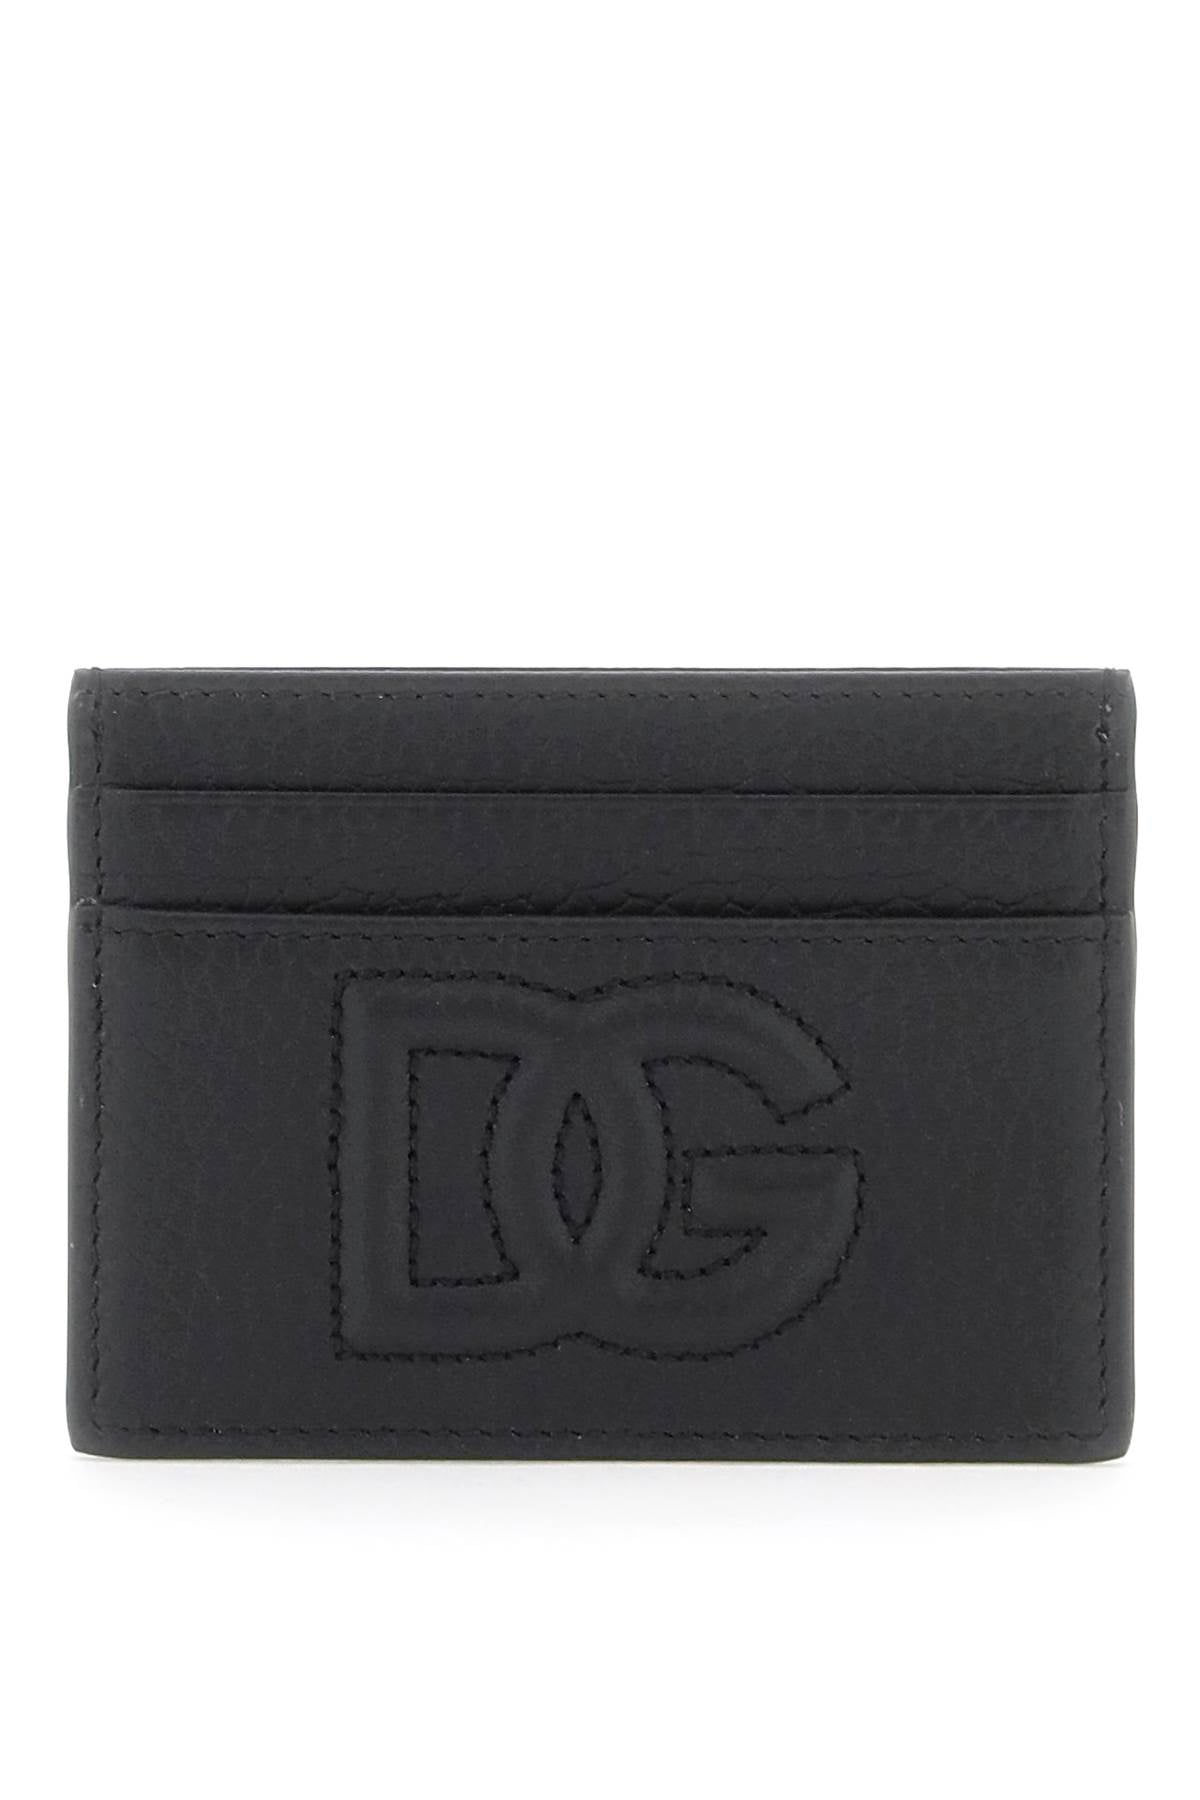 Dolce & gabbana cardholder with dg logo-0